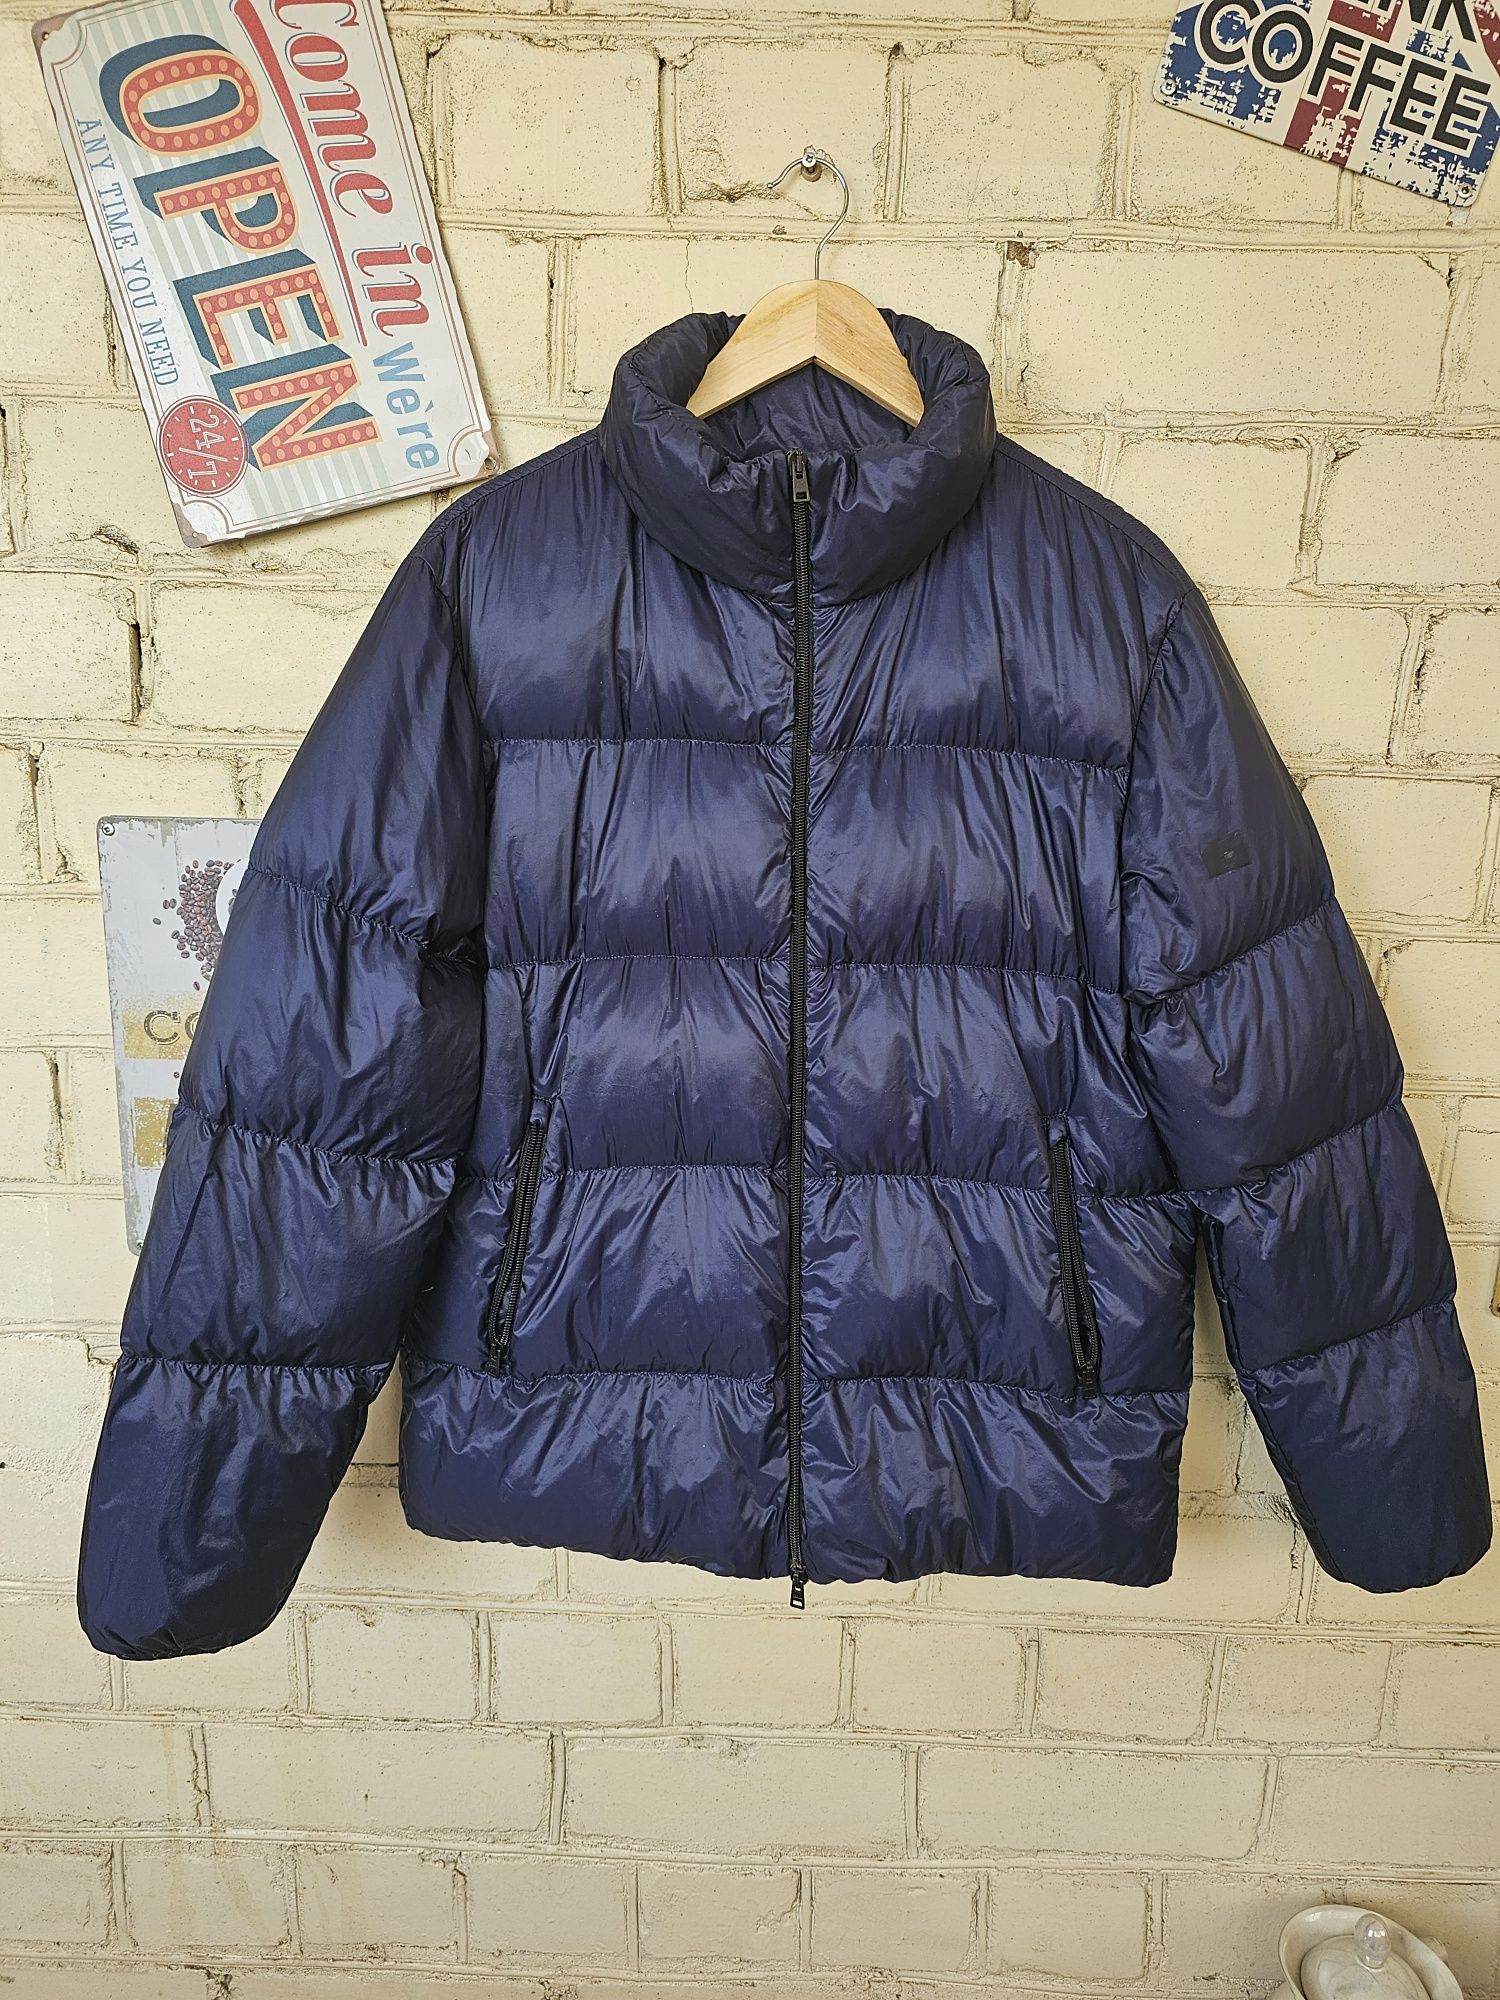 Мужская демисезонная/зима куртка HERNO, размер М-46